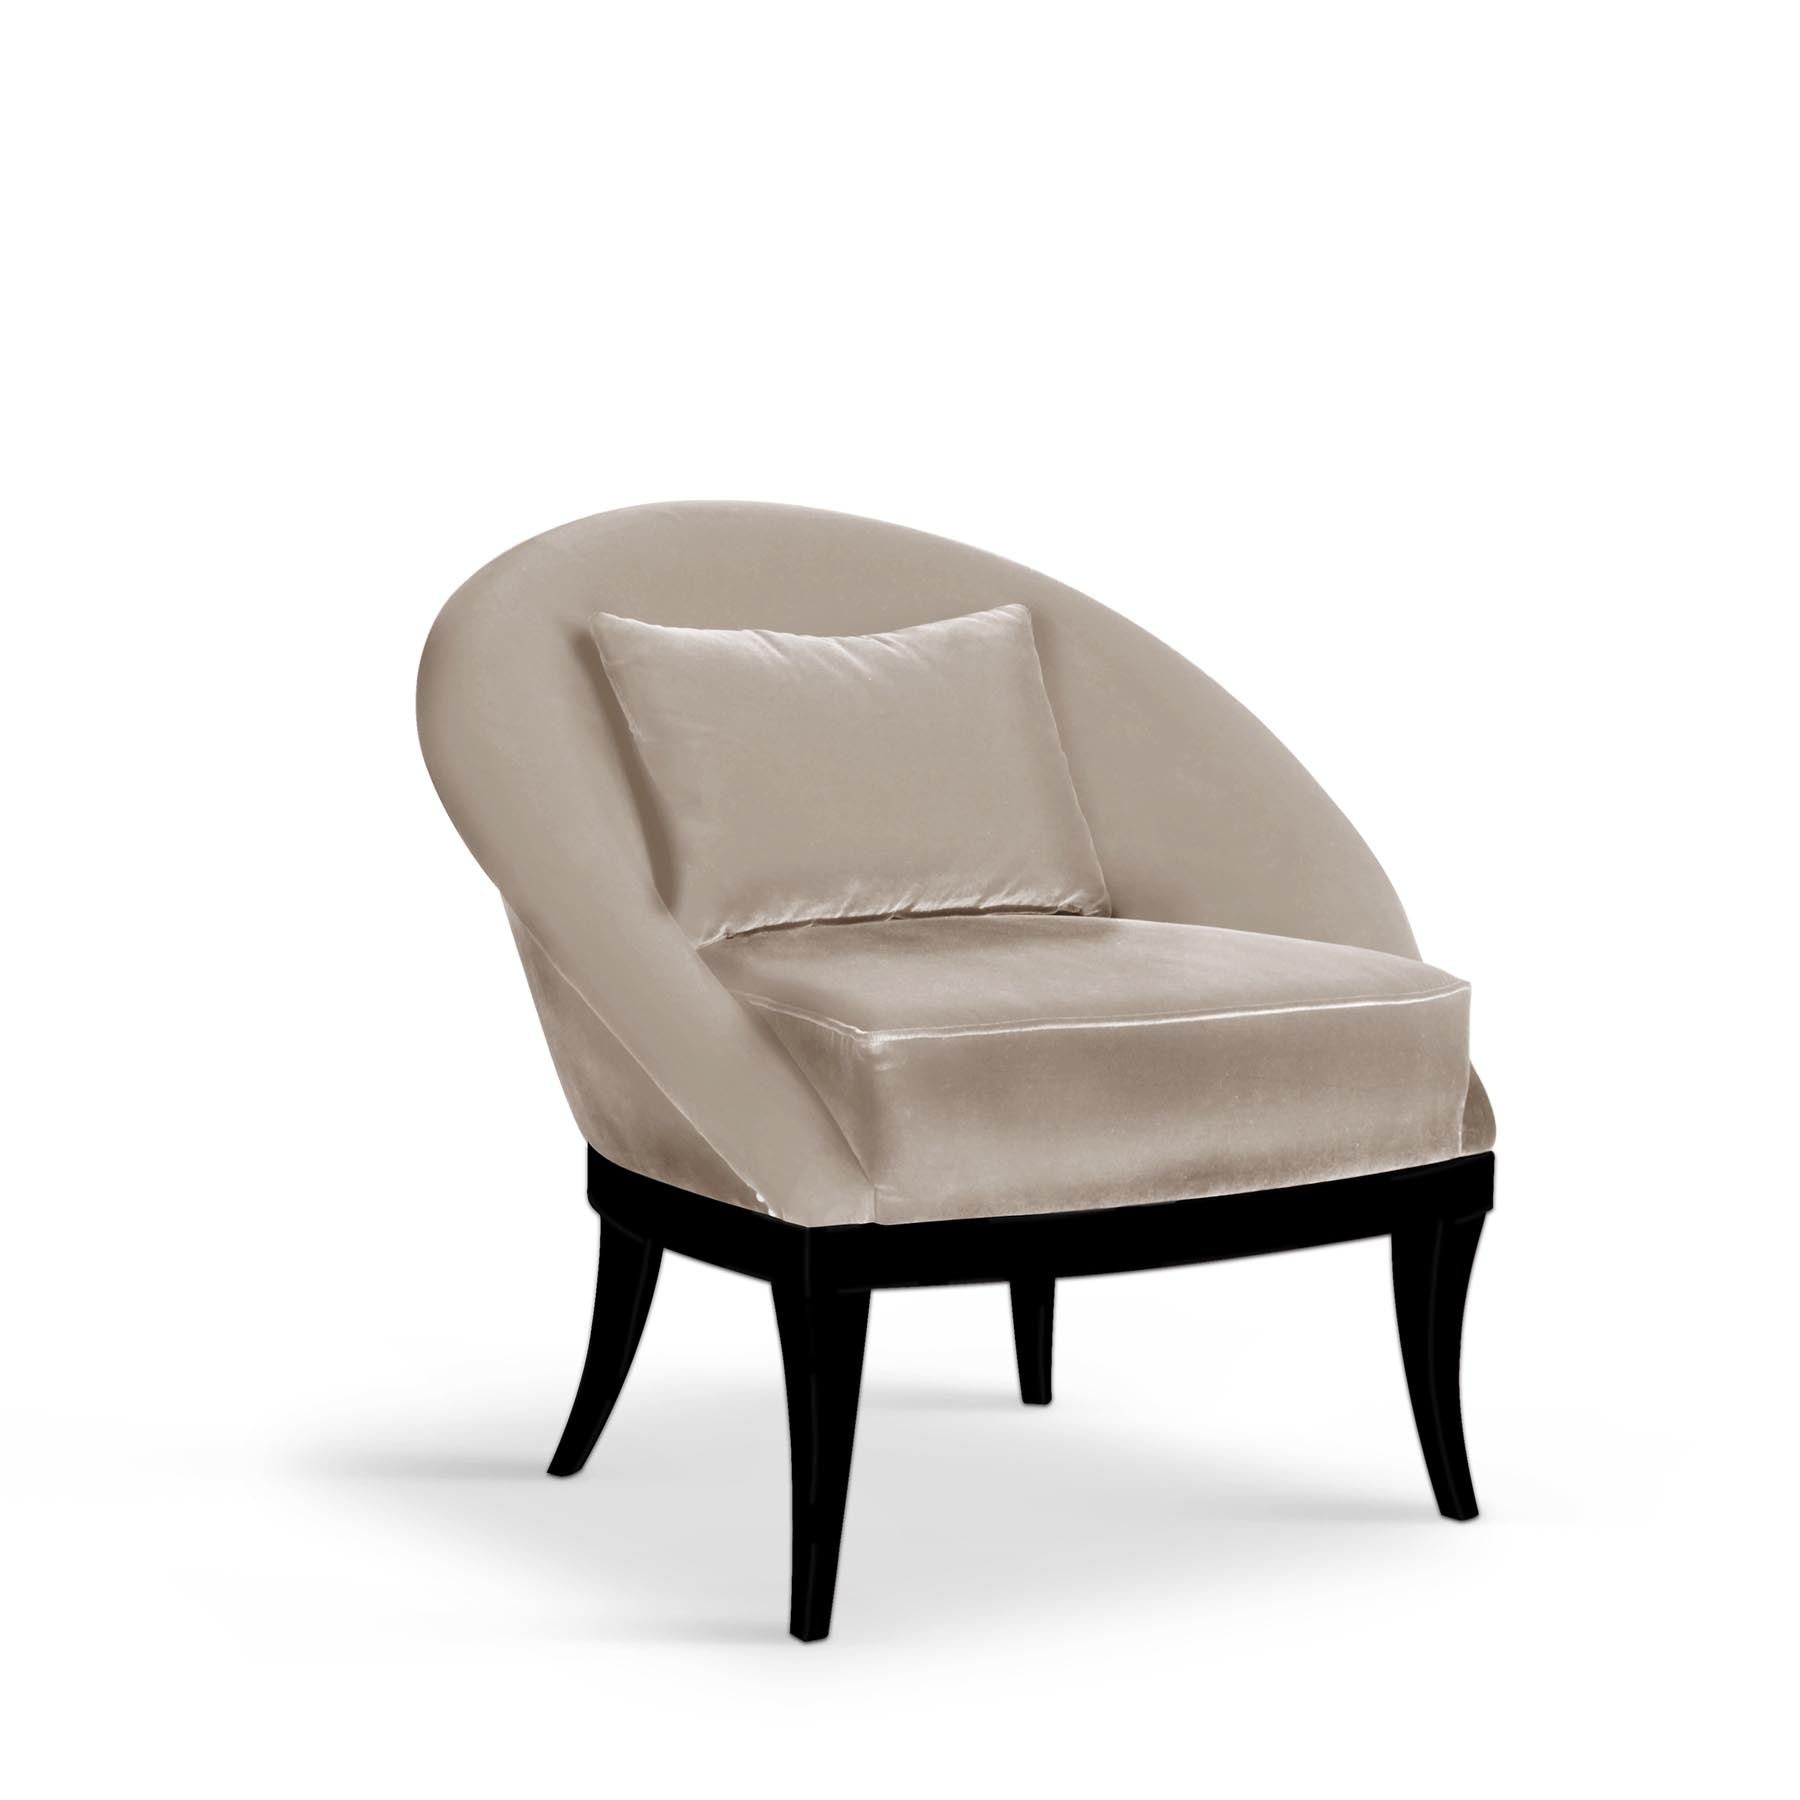 KIM - ARMCHAIR | Modern Furniture + Decor